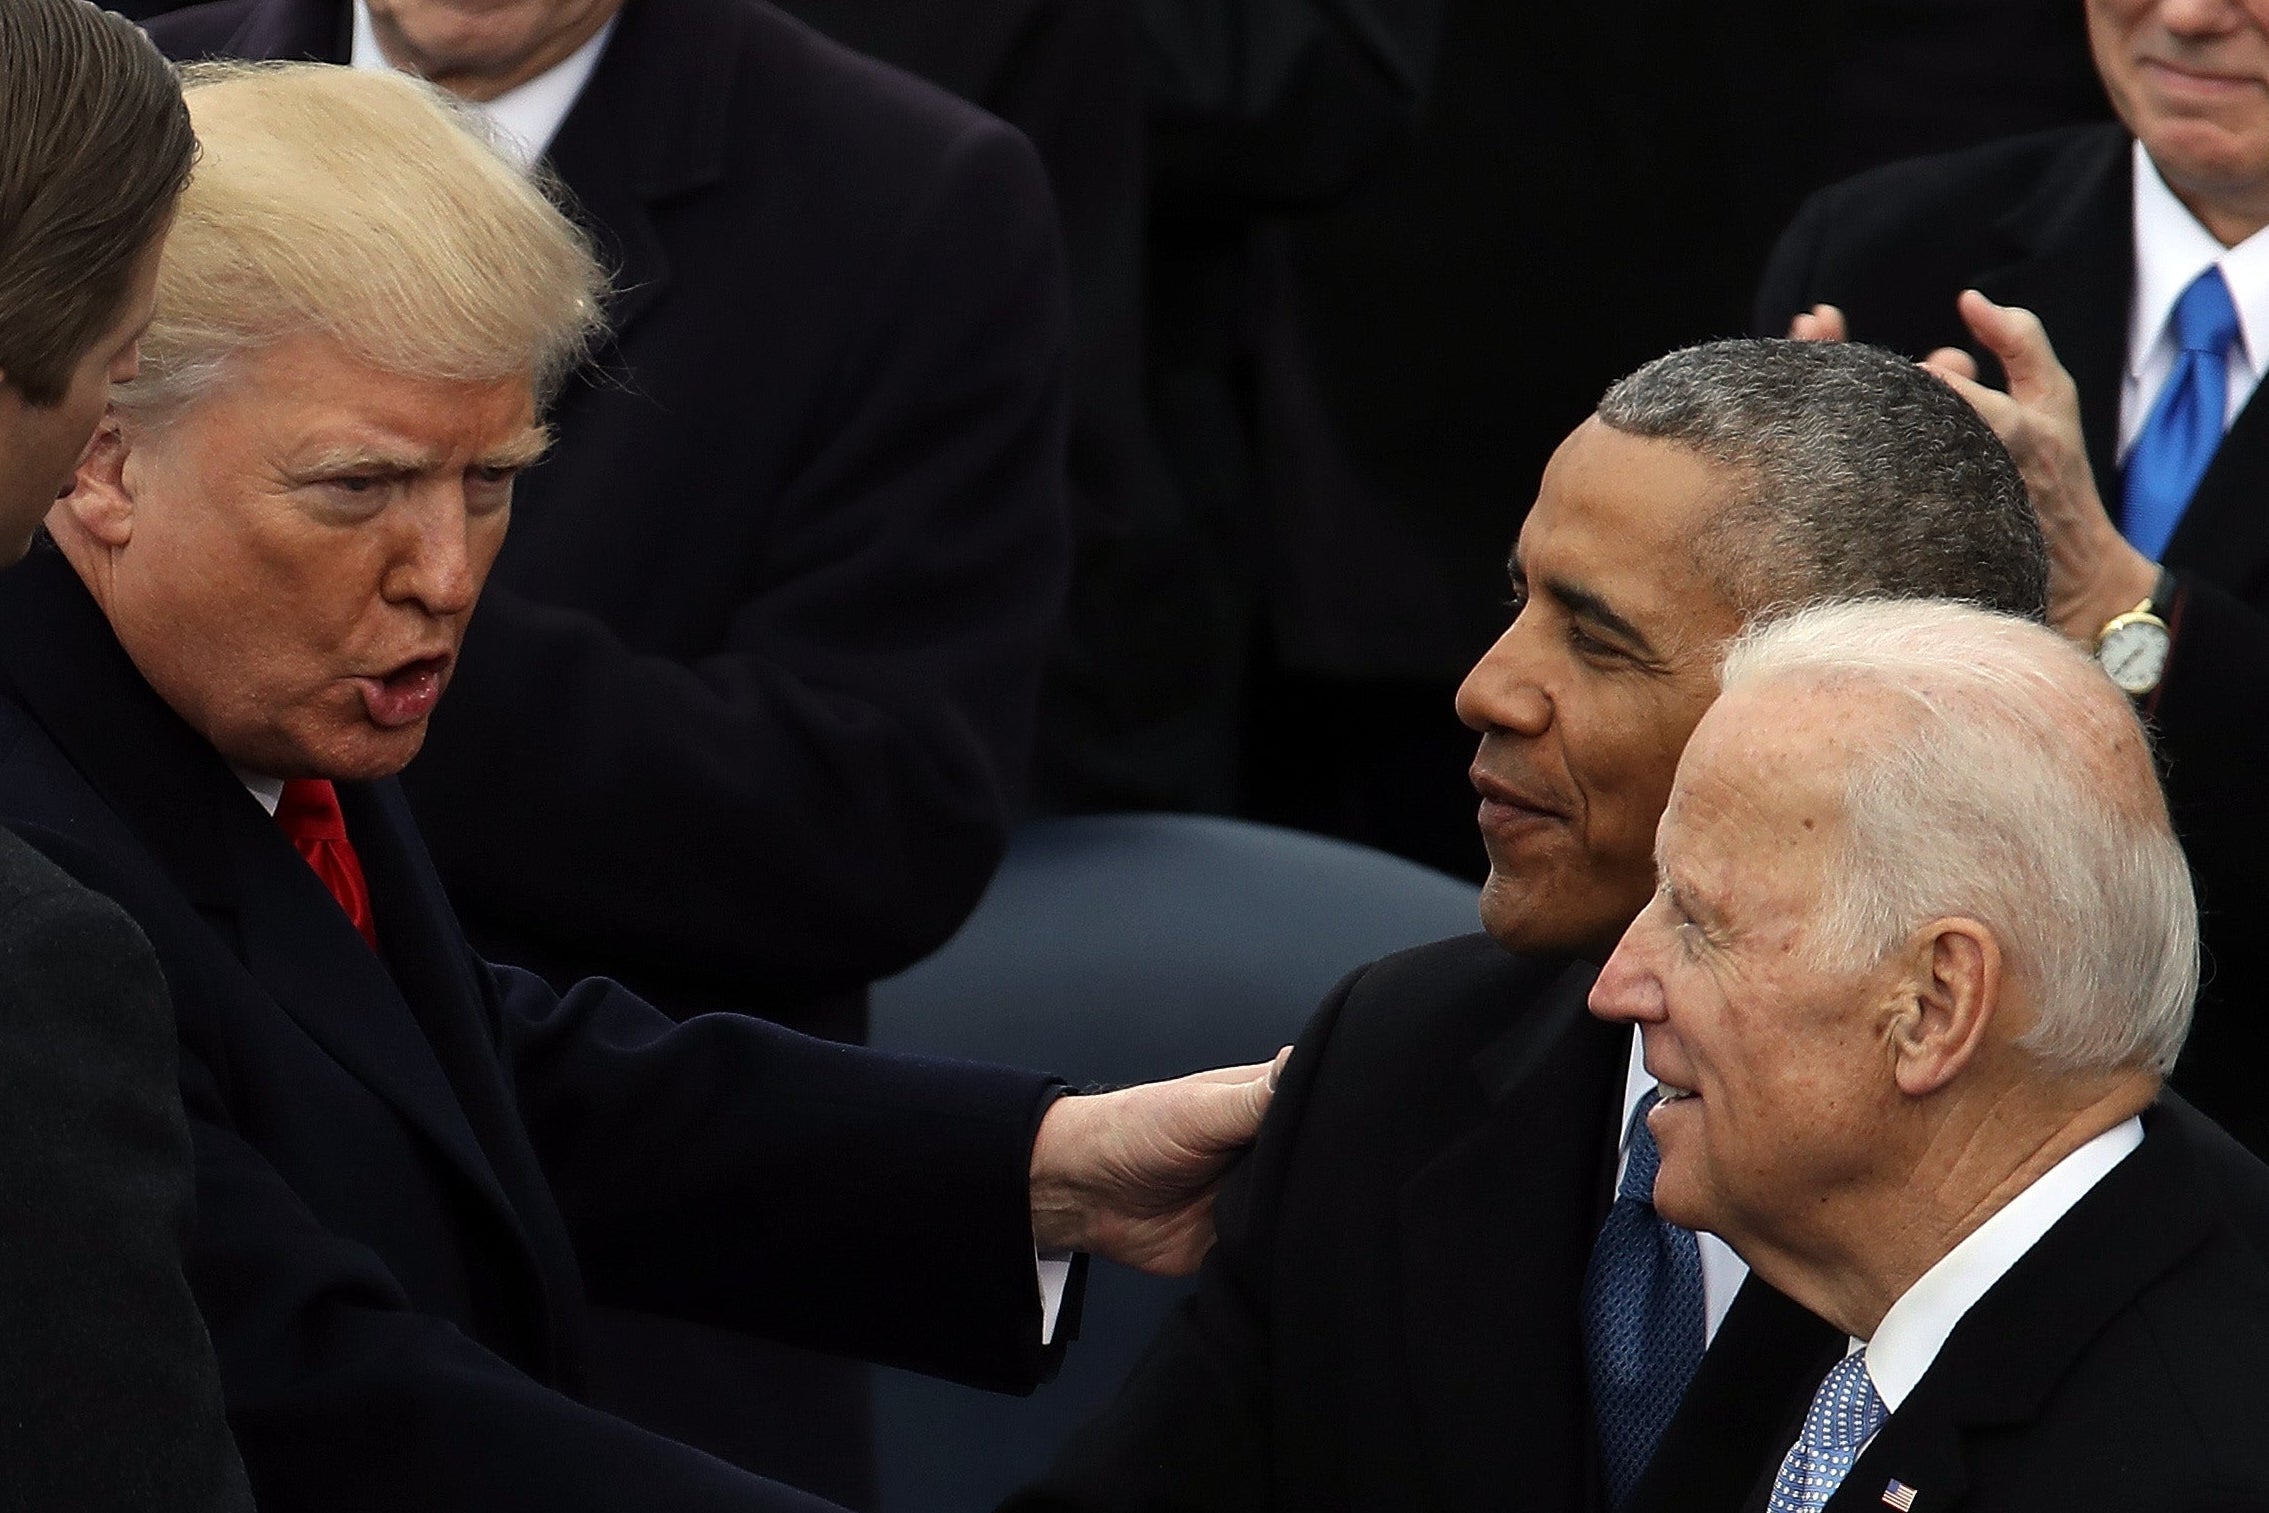 Trump gestures as Biden and Obama look on.